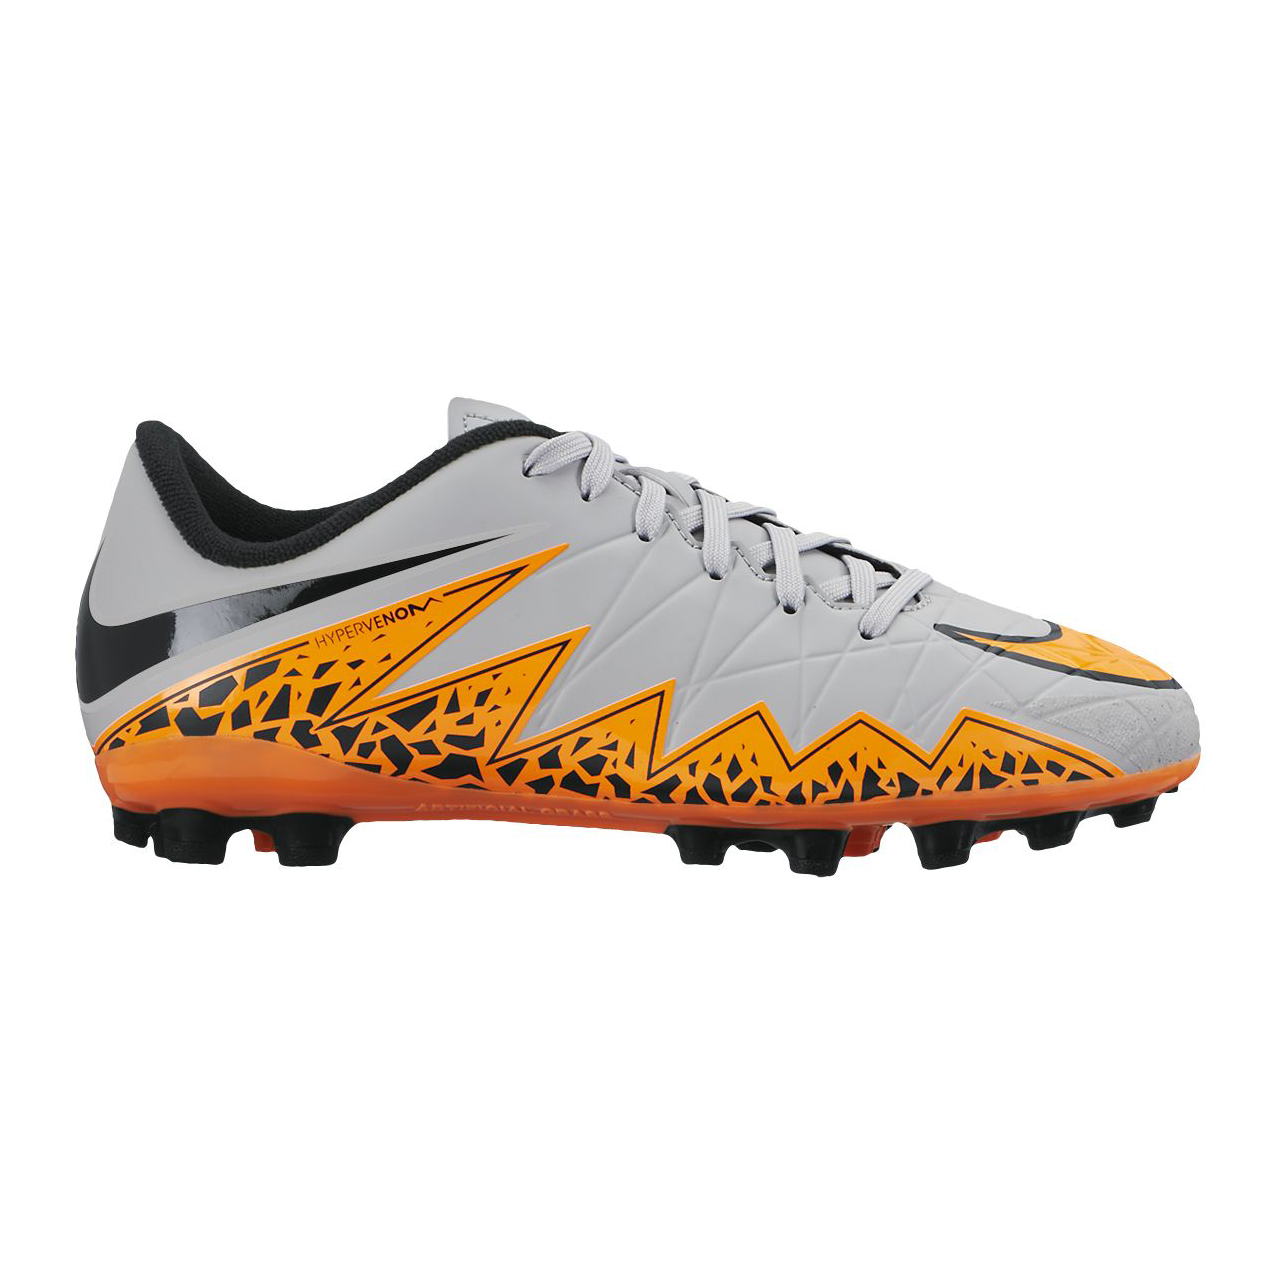 ensayo cumpleaños alarma Fútbol zapatos de Niño Nike Hypervenom Phelon II AG colore gris naranja -  Nike - SportIT.com